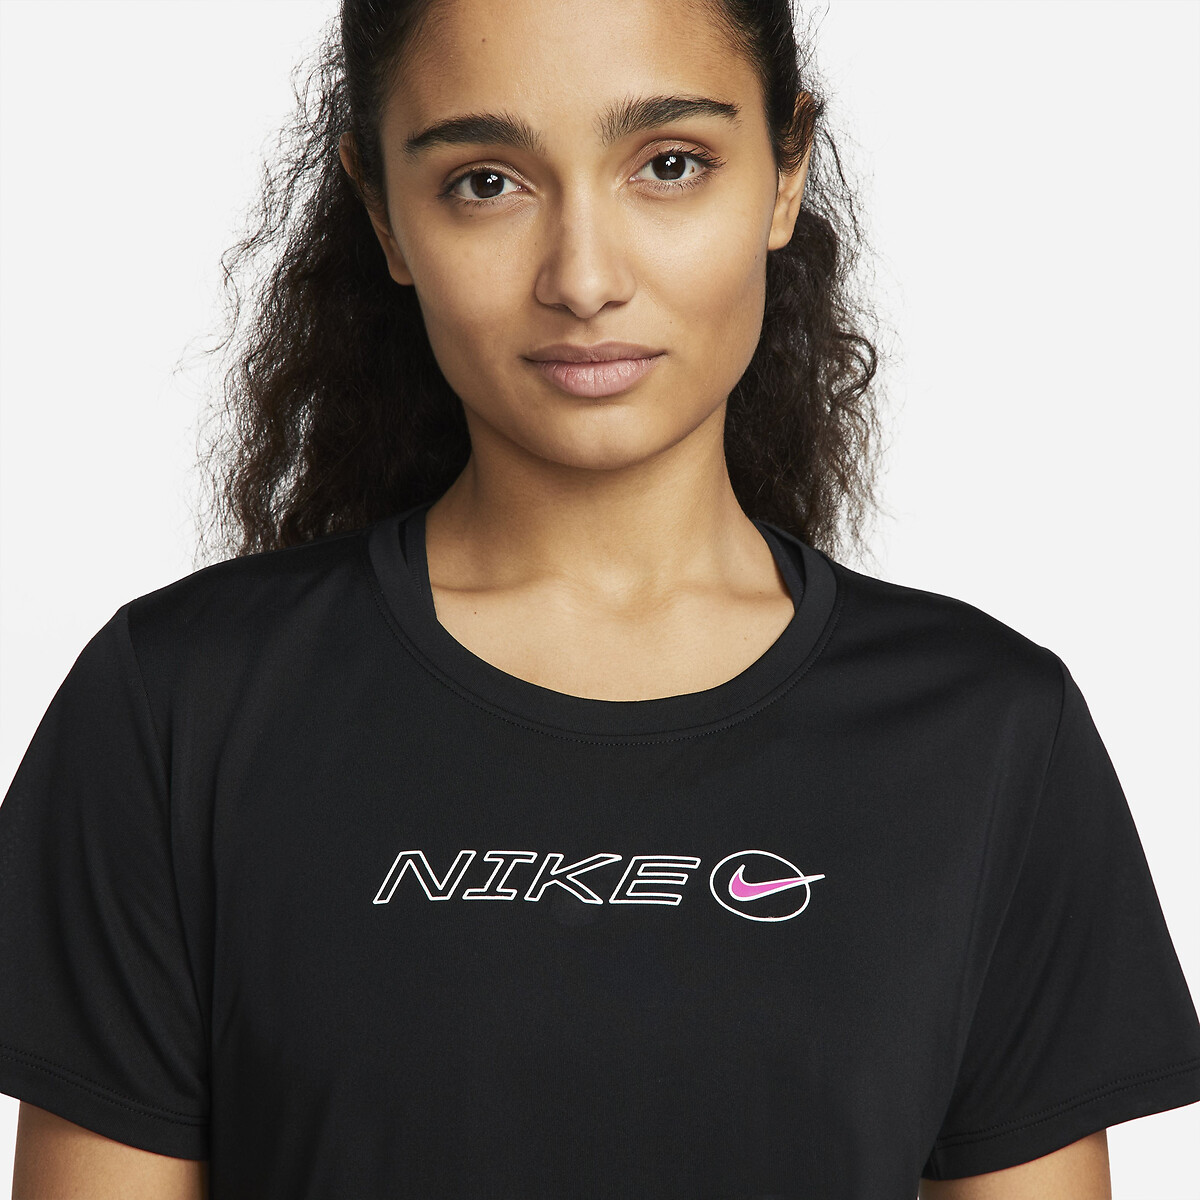 T-shirt de desporto one luxe, respirável preto Nike